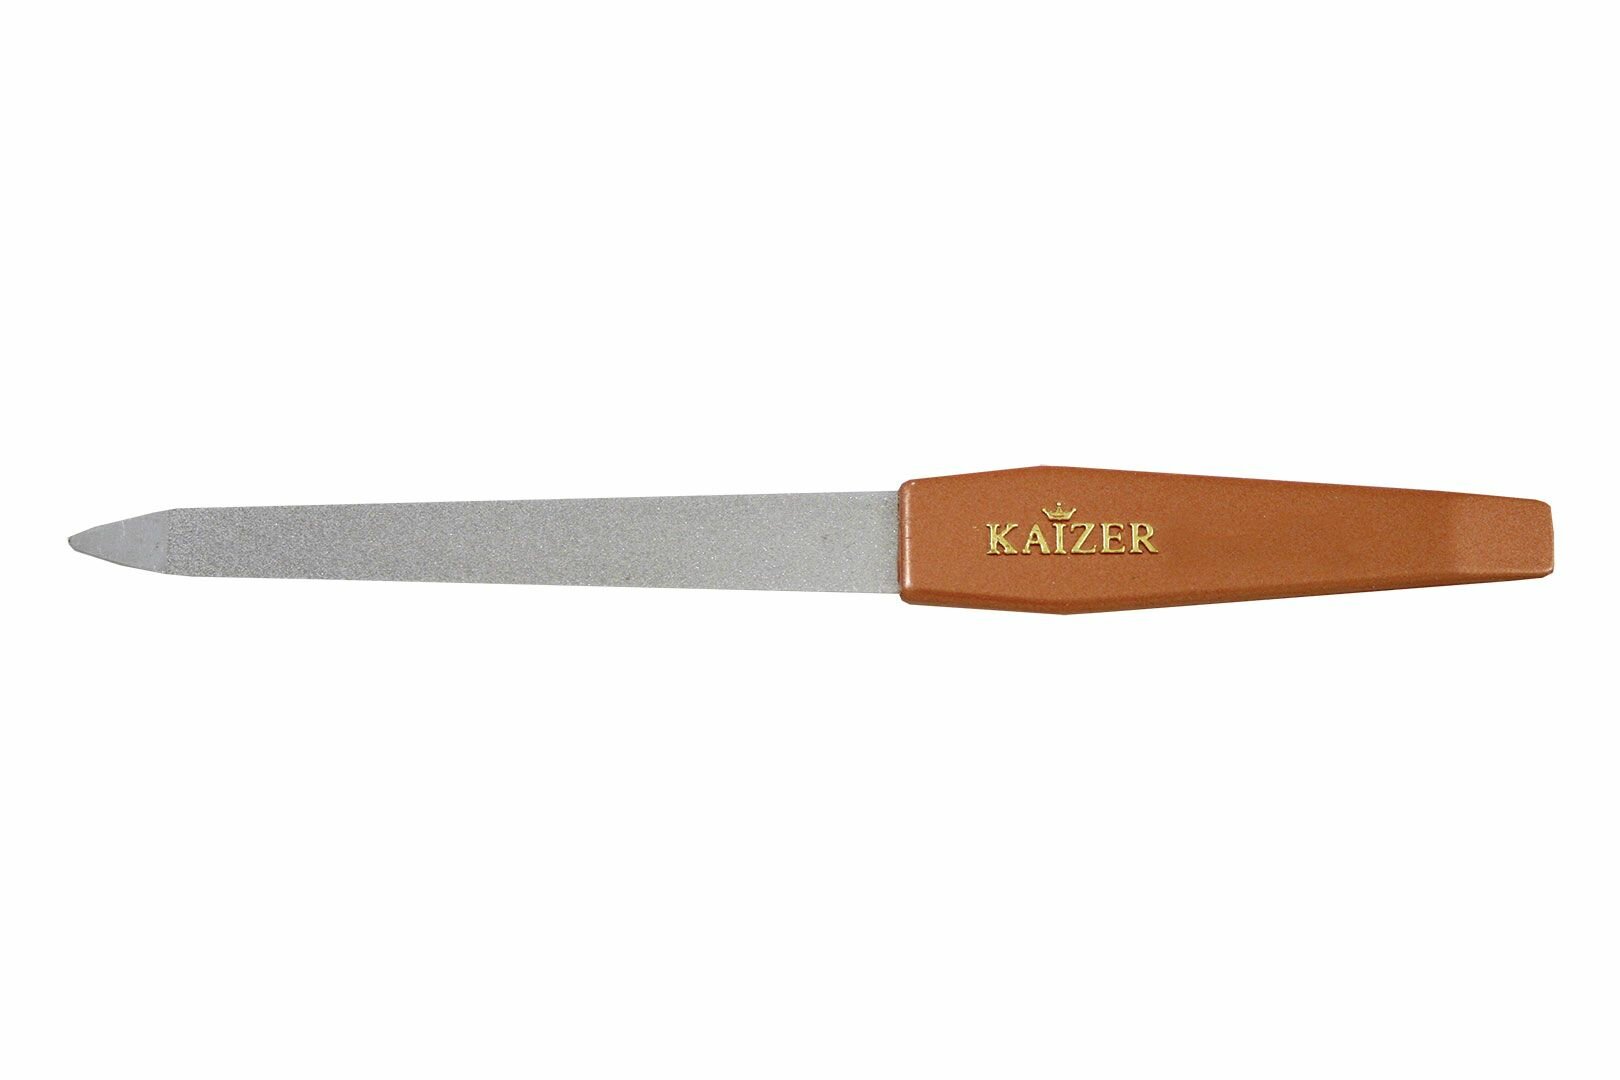 KAIZER Пилка алмазная, 150 мм/85 мм, коричневая ручка /